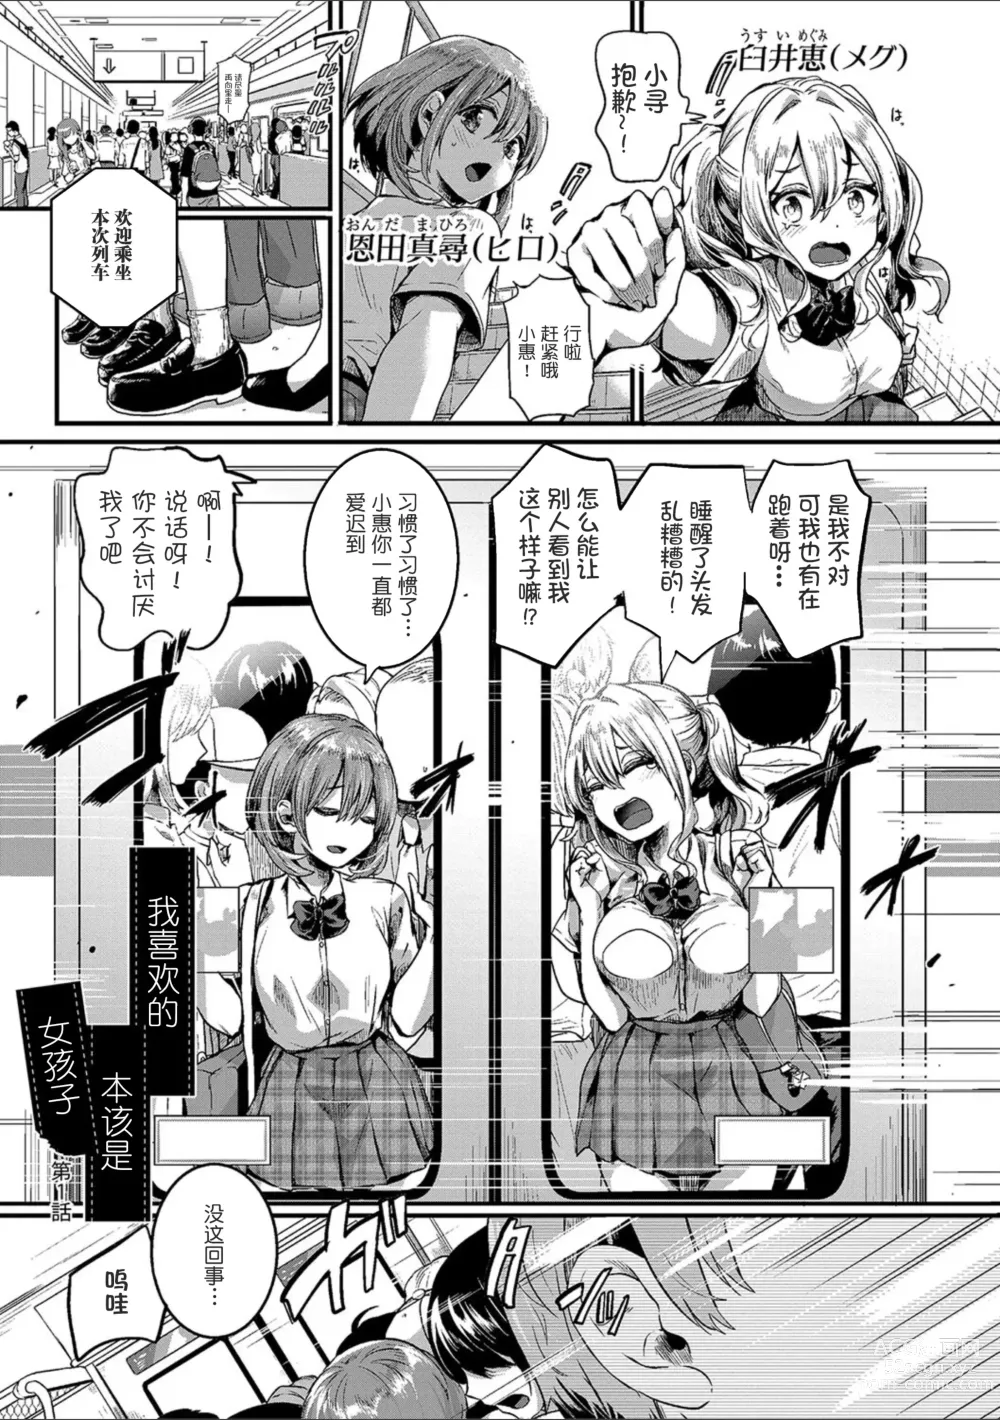 Page 8 of manga Watashi wa Onnanoko ga Suki datta Hazu nano ni - But I fell in with something different.